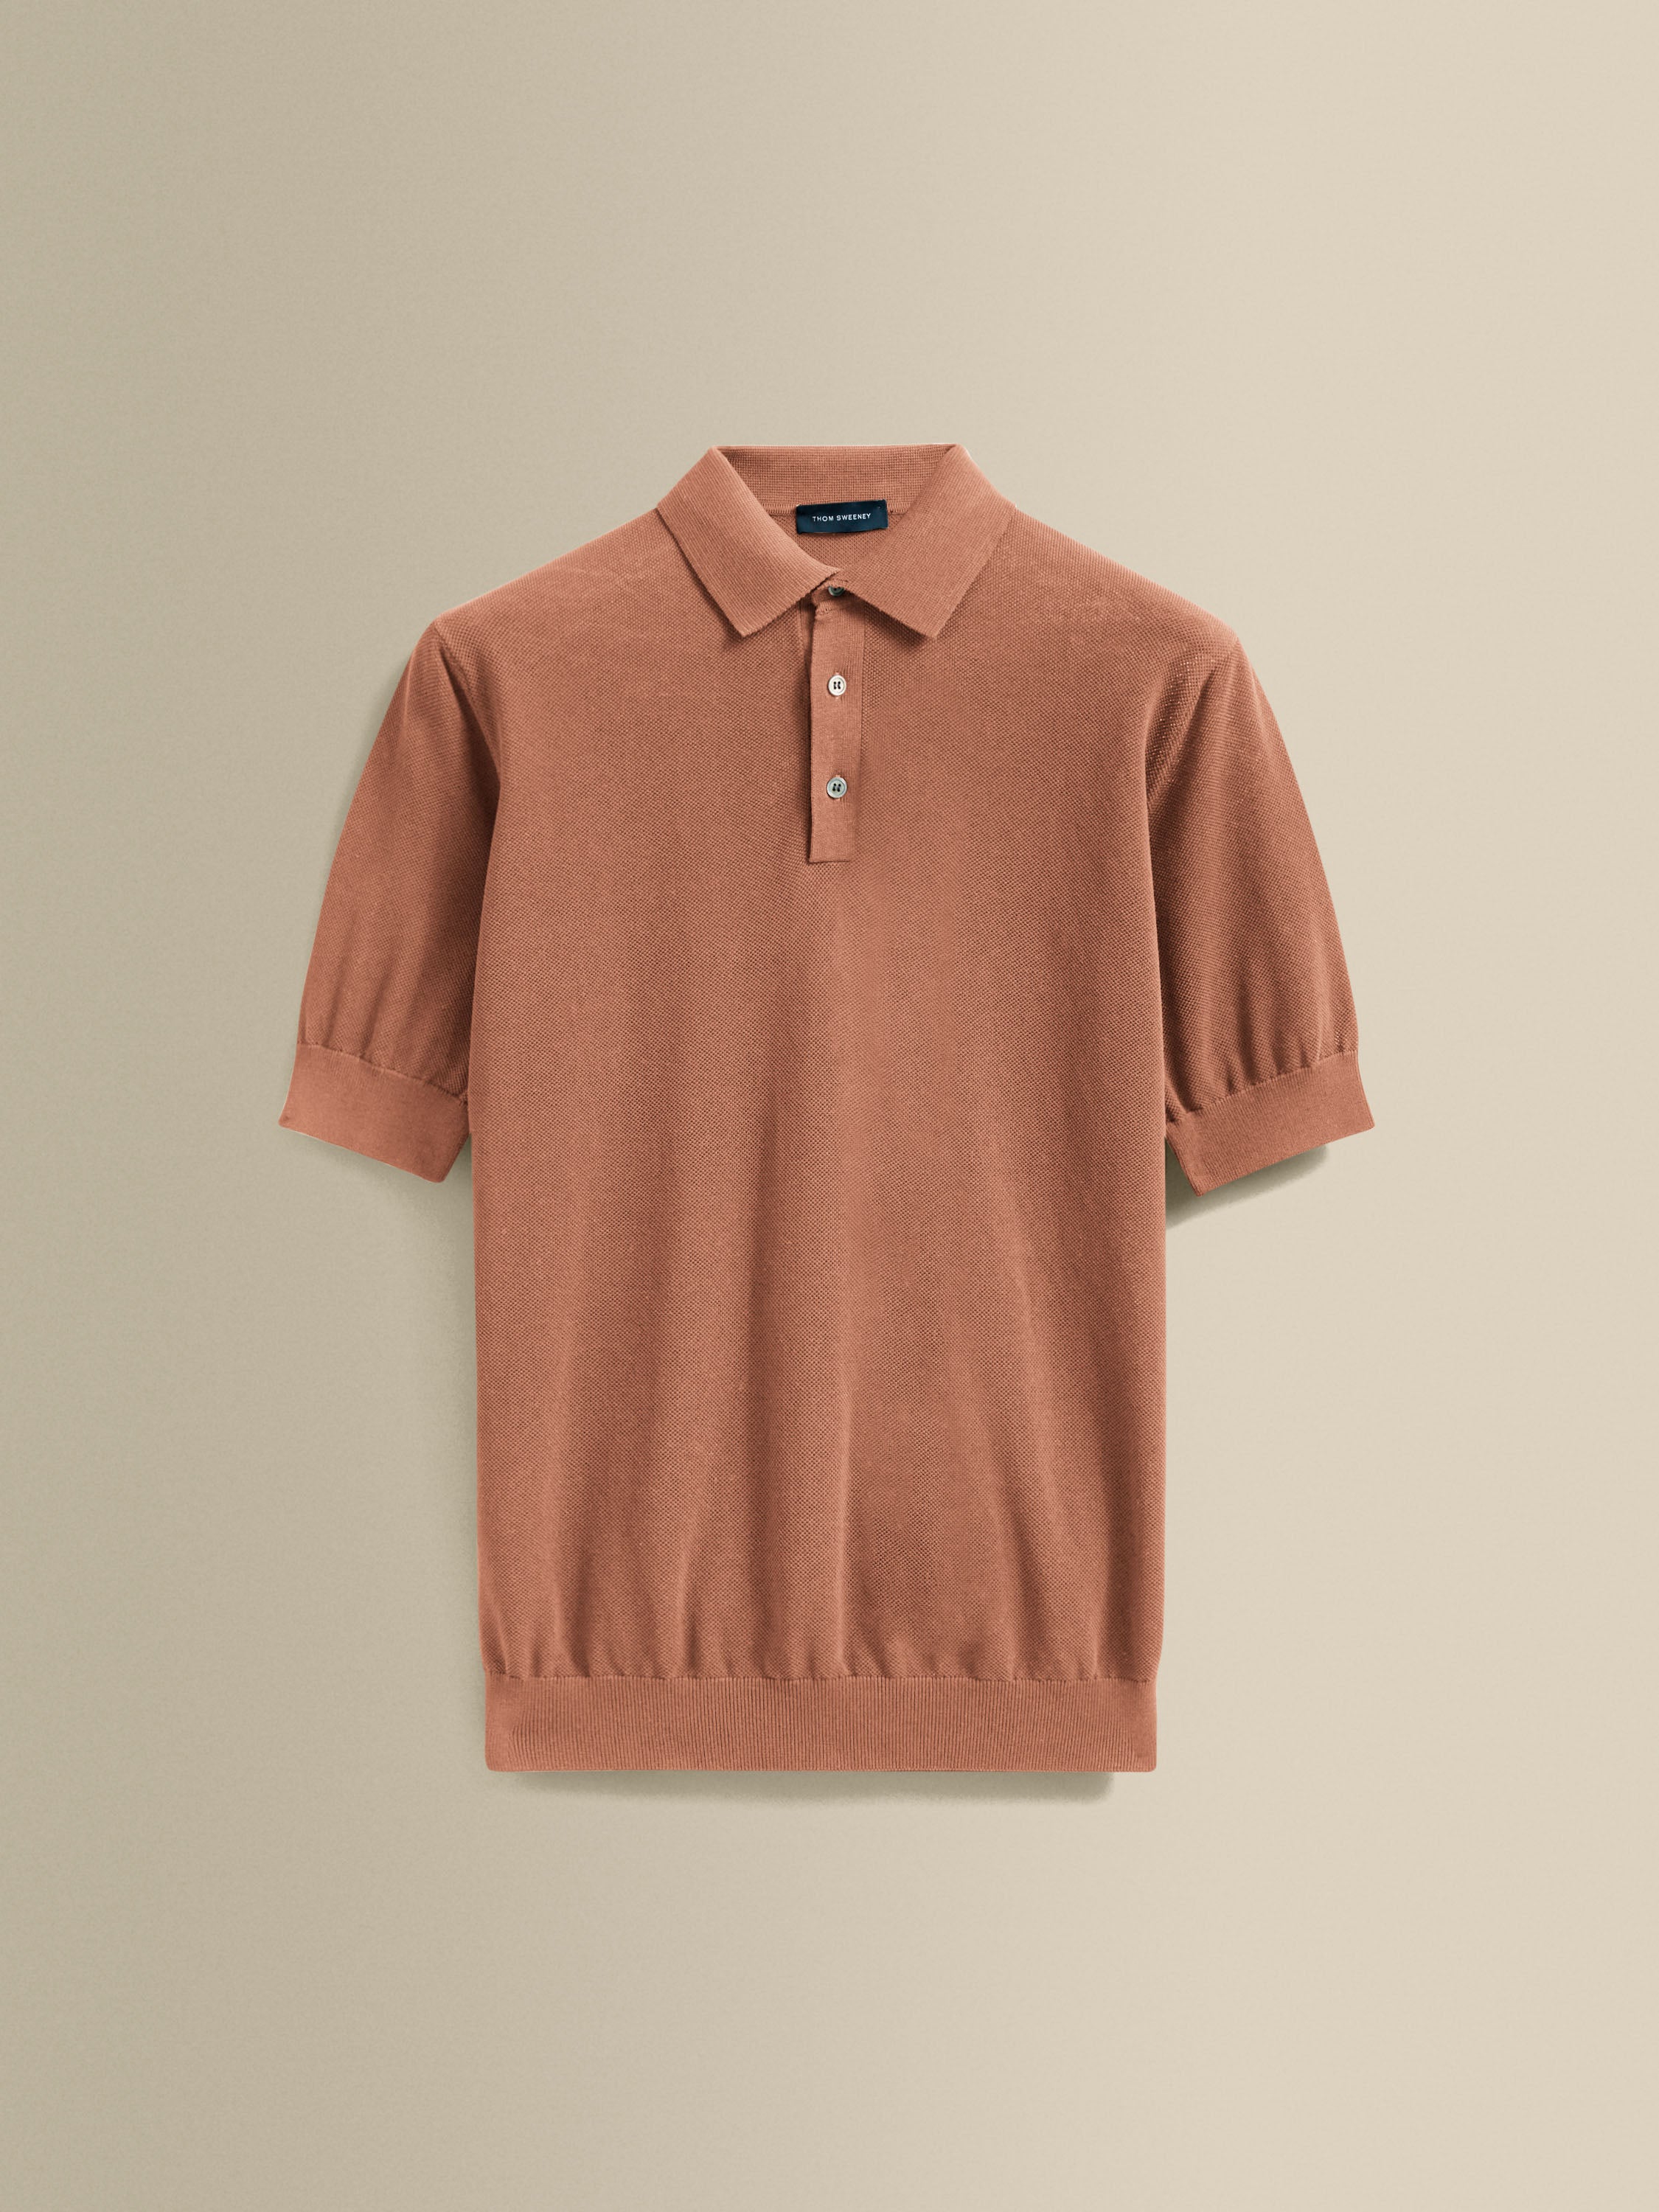 Cotton Air Crepe Polo Shirt Burnt Orange Product Image